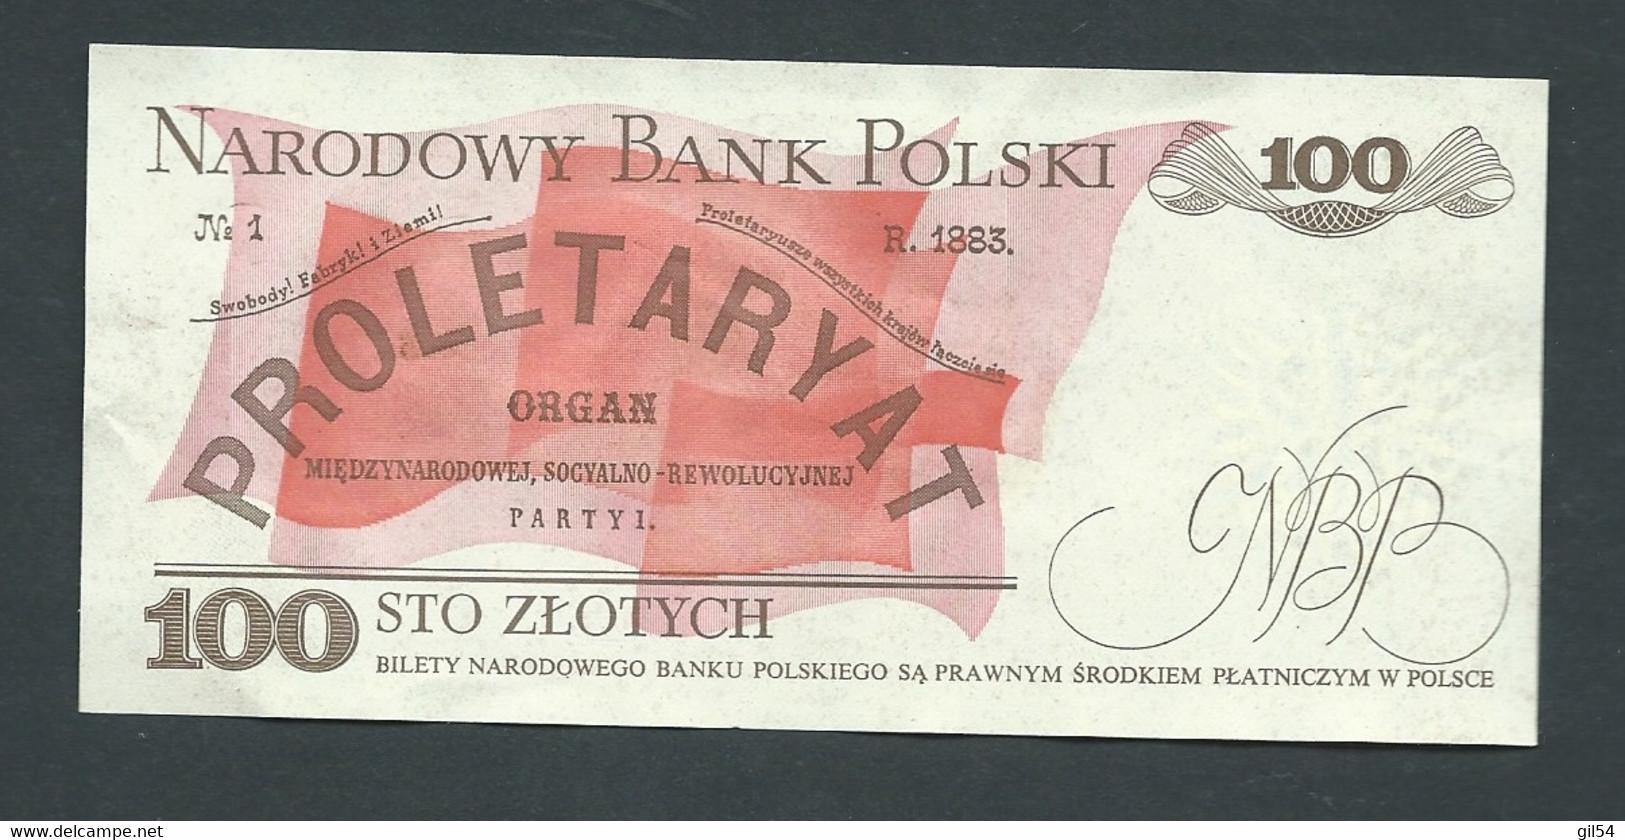 Billet, Pologne, 100 Zlotych, 1975-1988, 1988-12-01, TT0999653, Pelurage , Laura 7001 - Polen